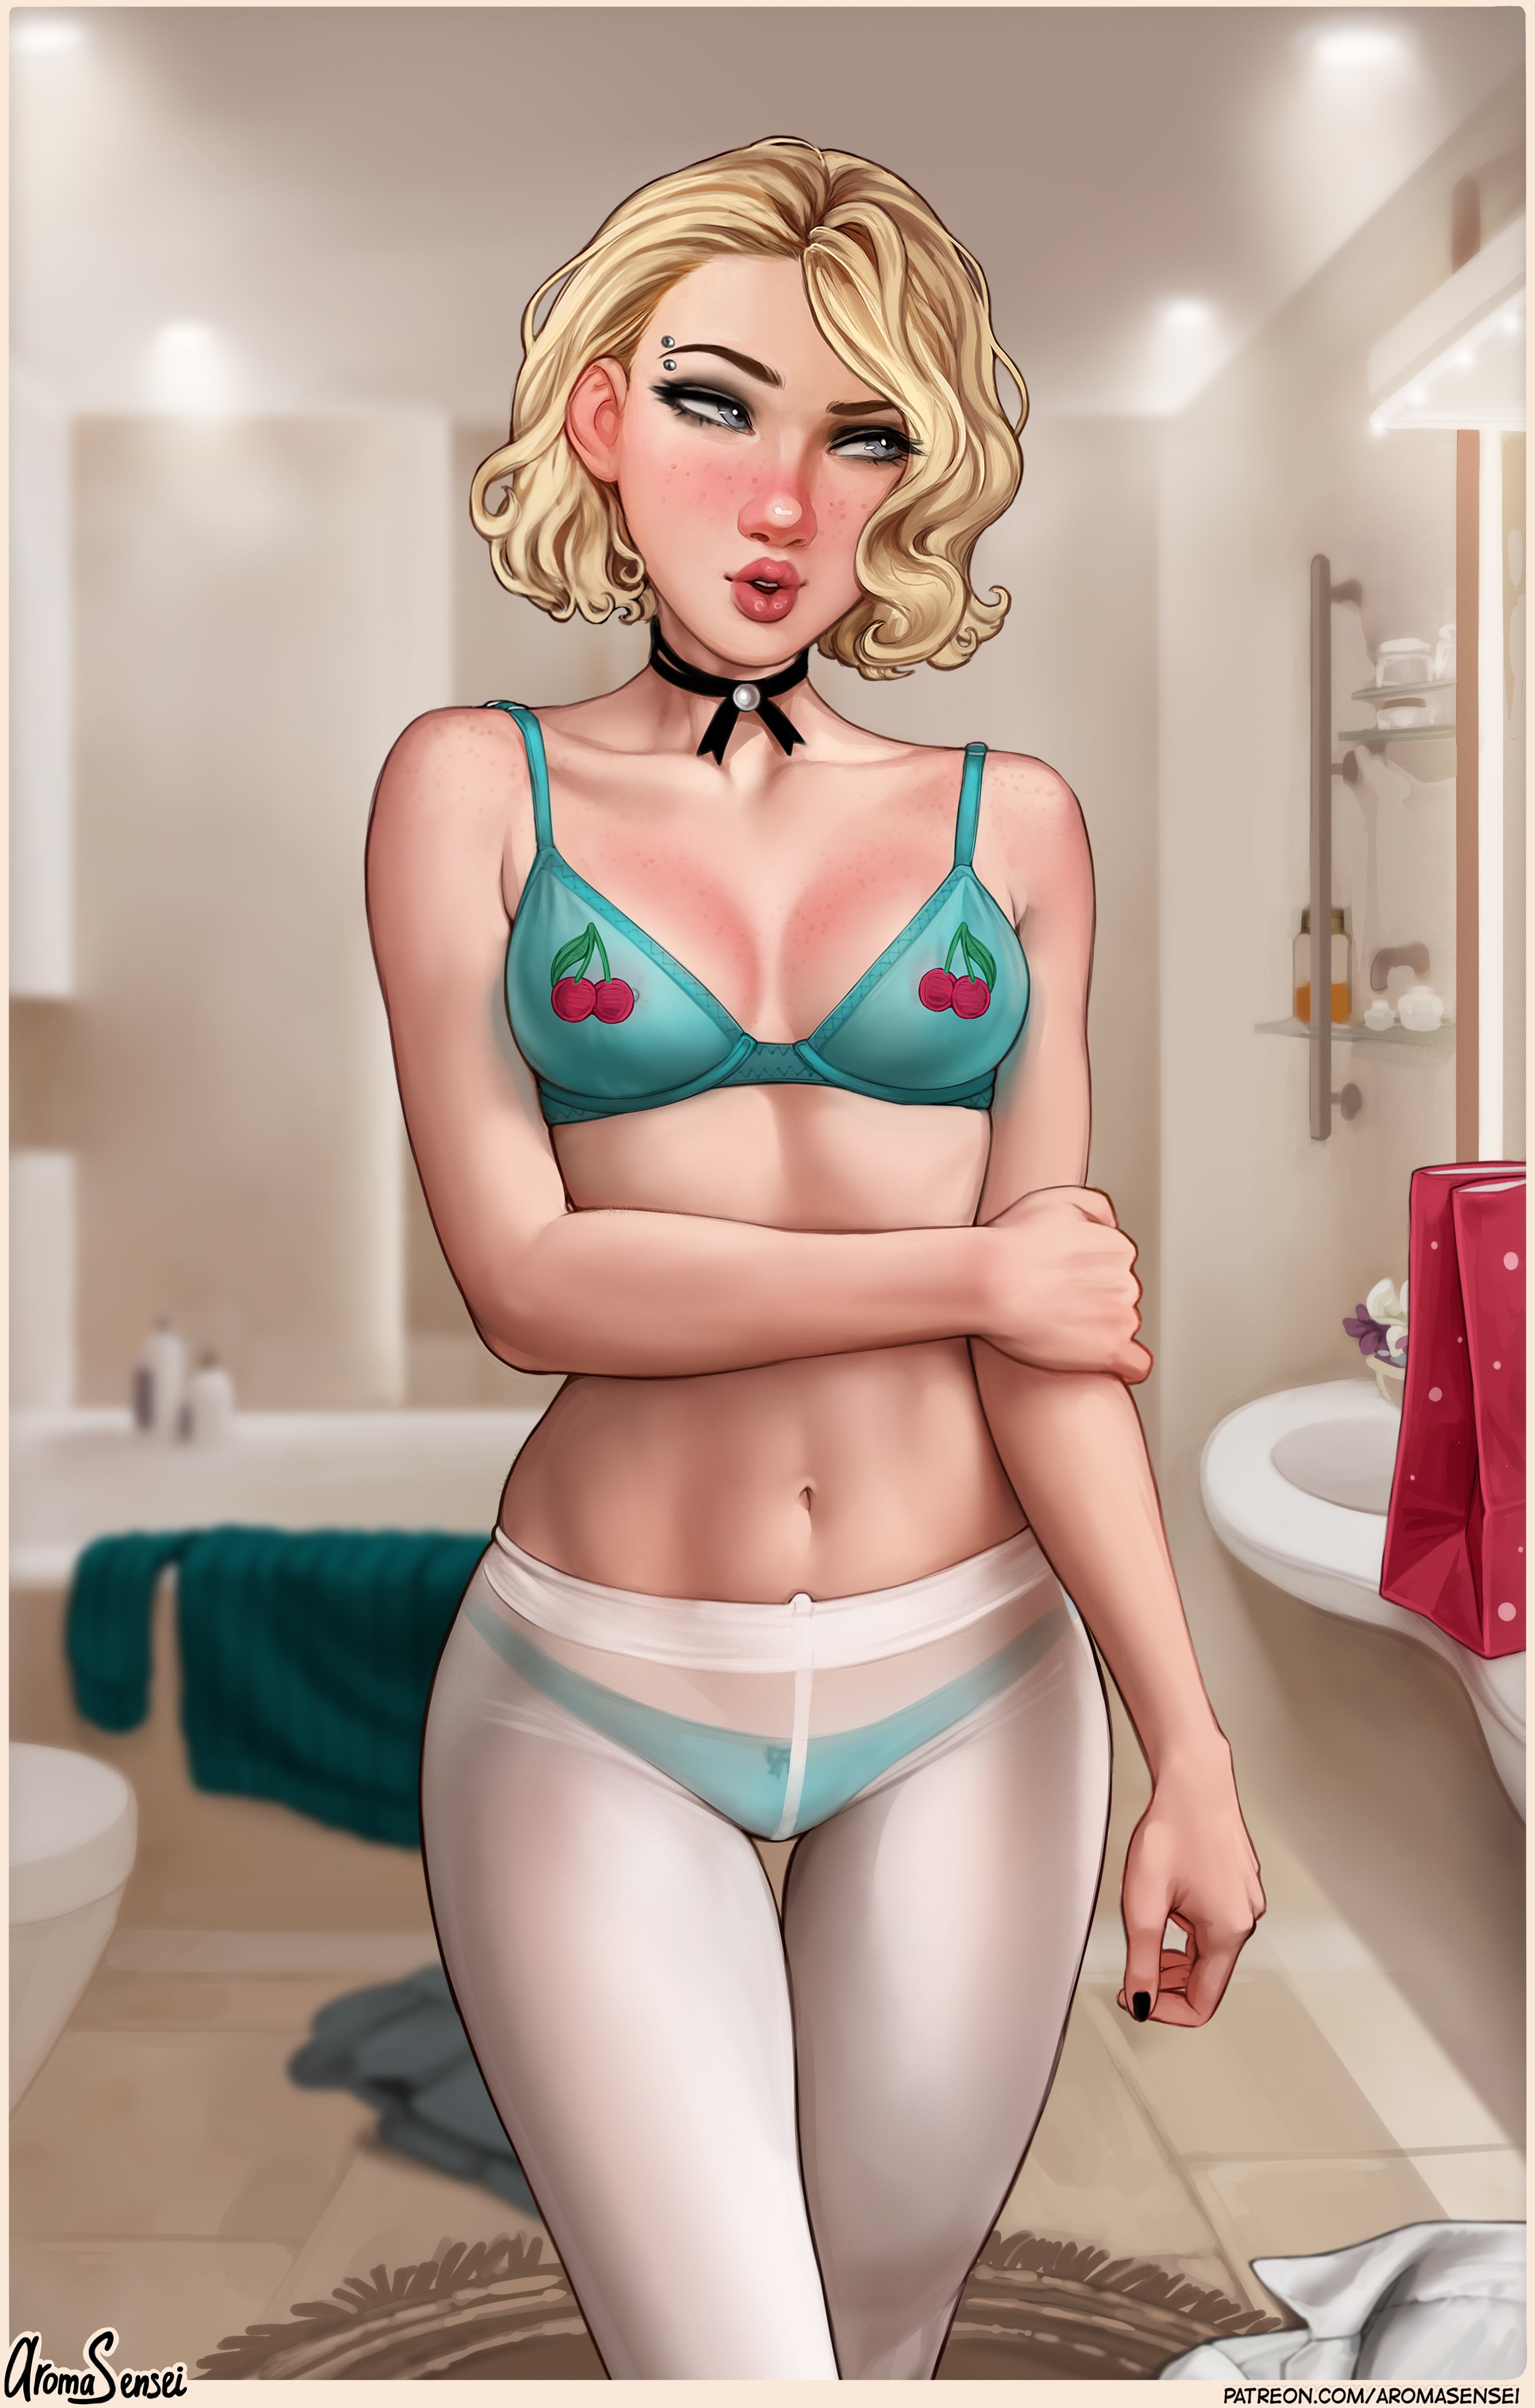 General 3188x5000 Gwen Stacy marvel character Marvel Comics blonde bathroom artwork drawing fan art Aroma Sensei underwear